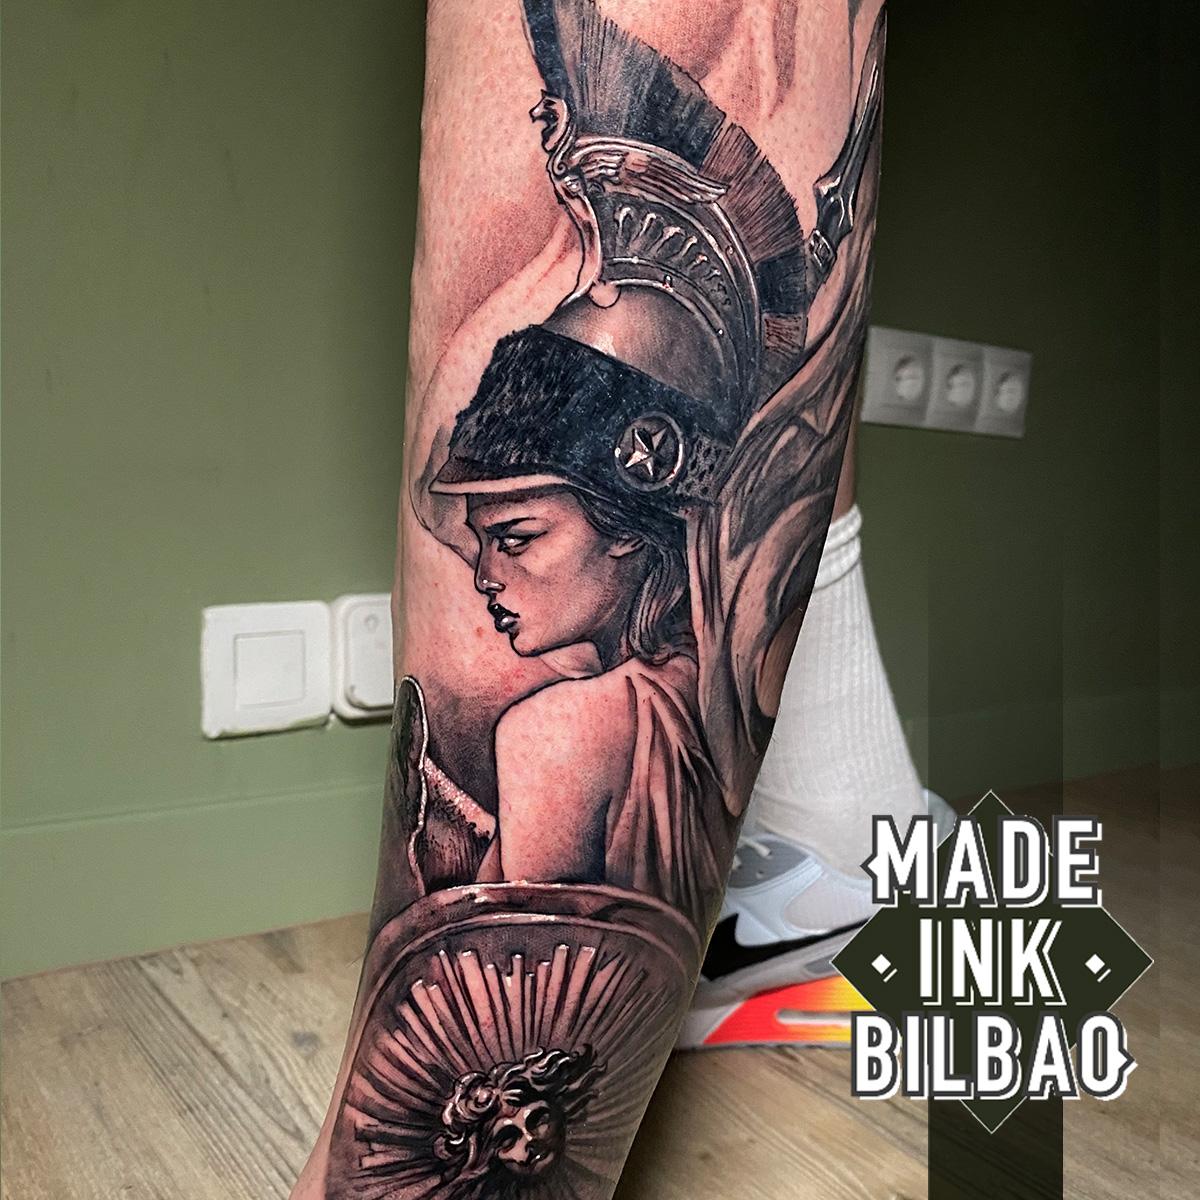 Tatuaje leona y diosa griega - Made Ink Bilbao